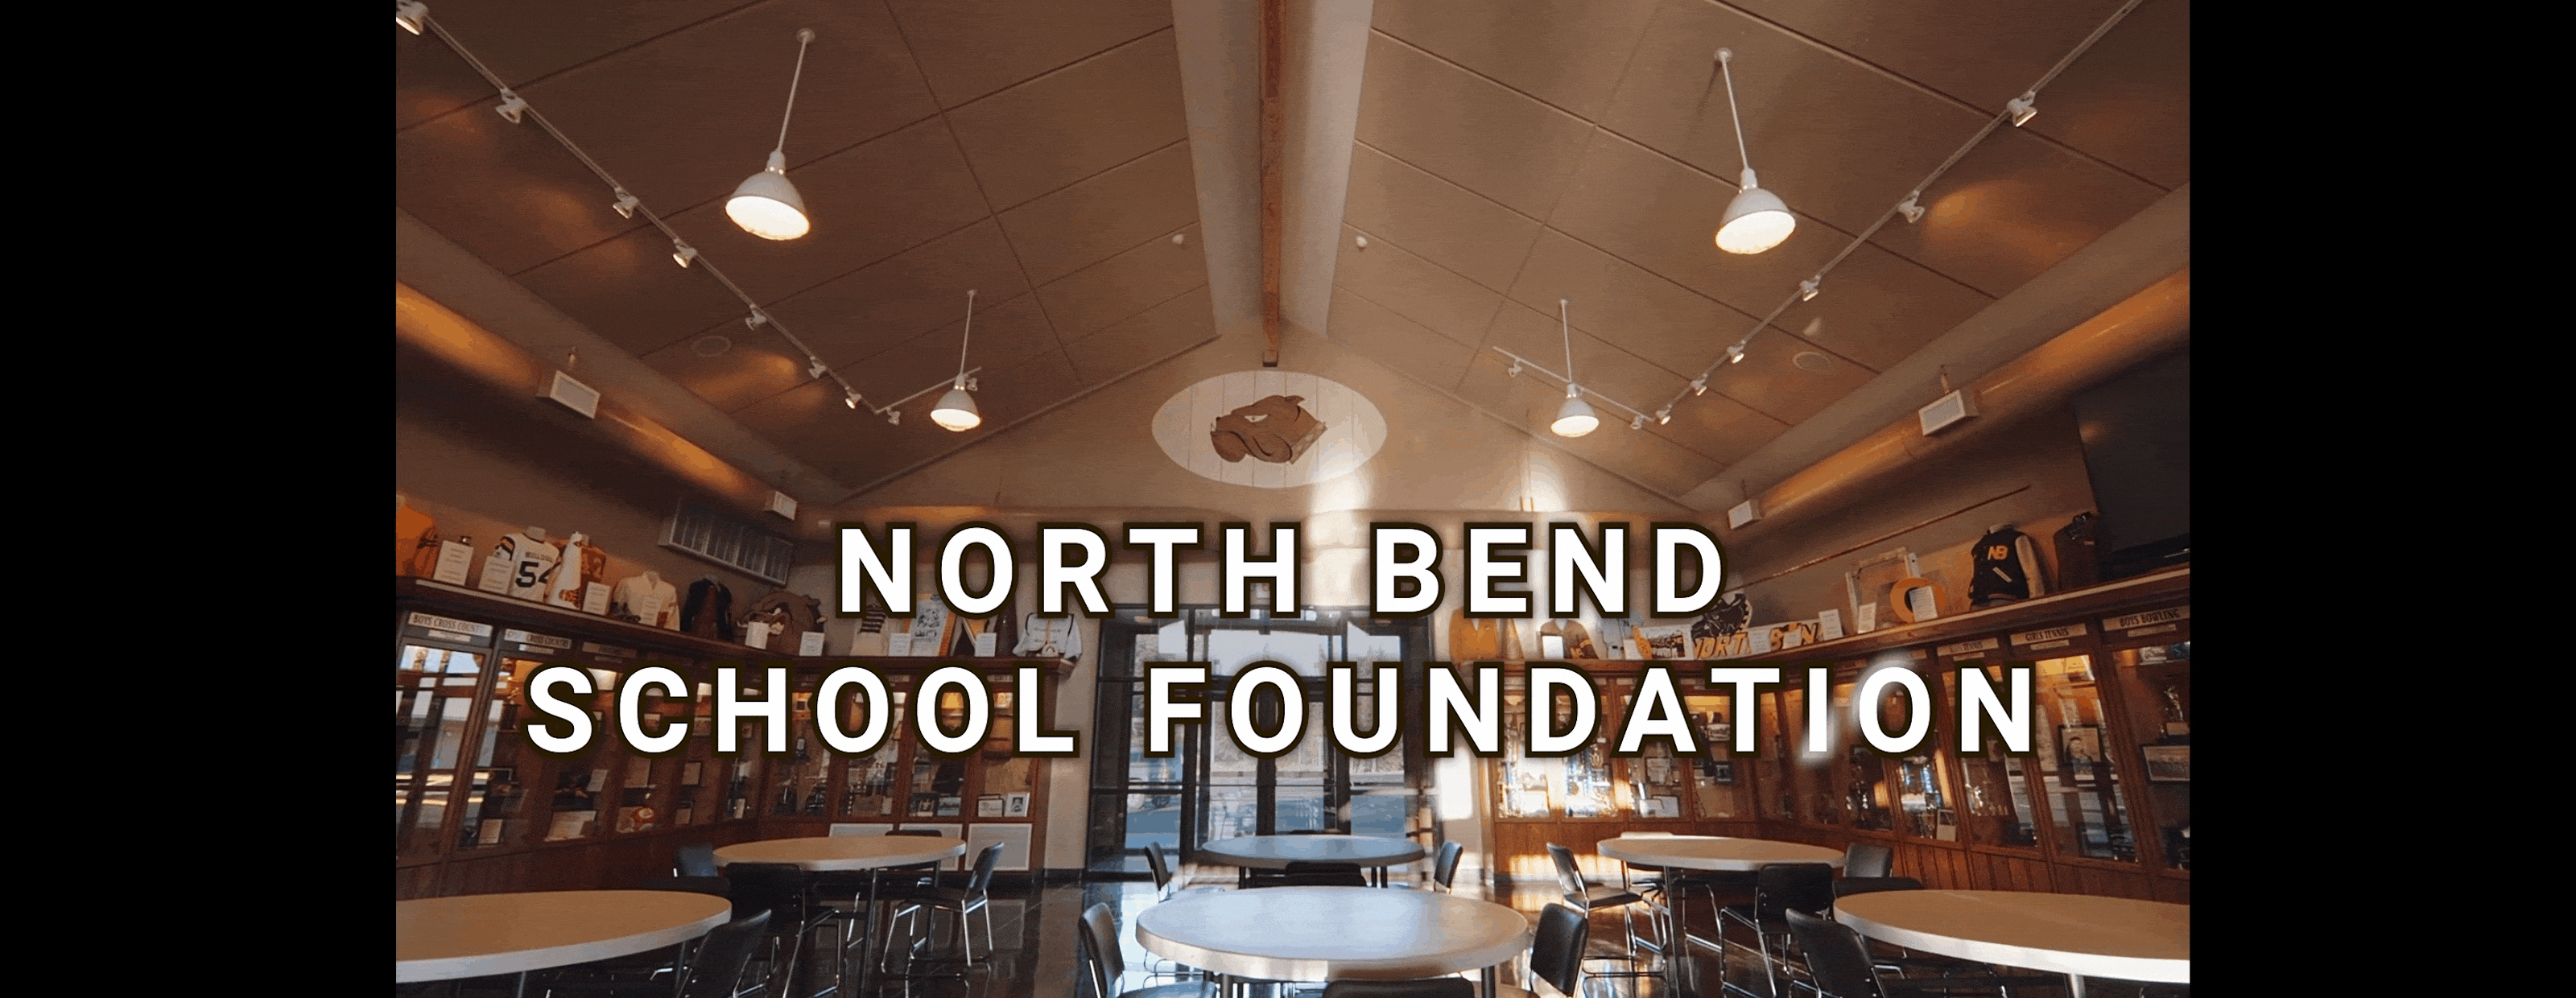 North Bend School Foundation gif